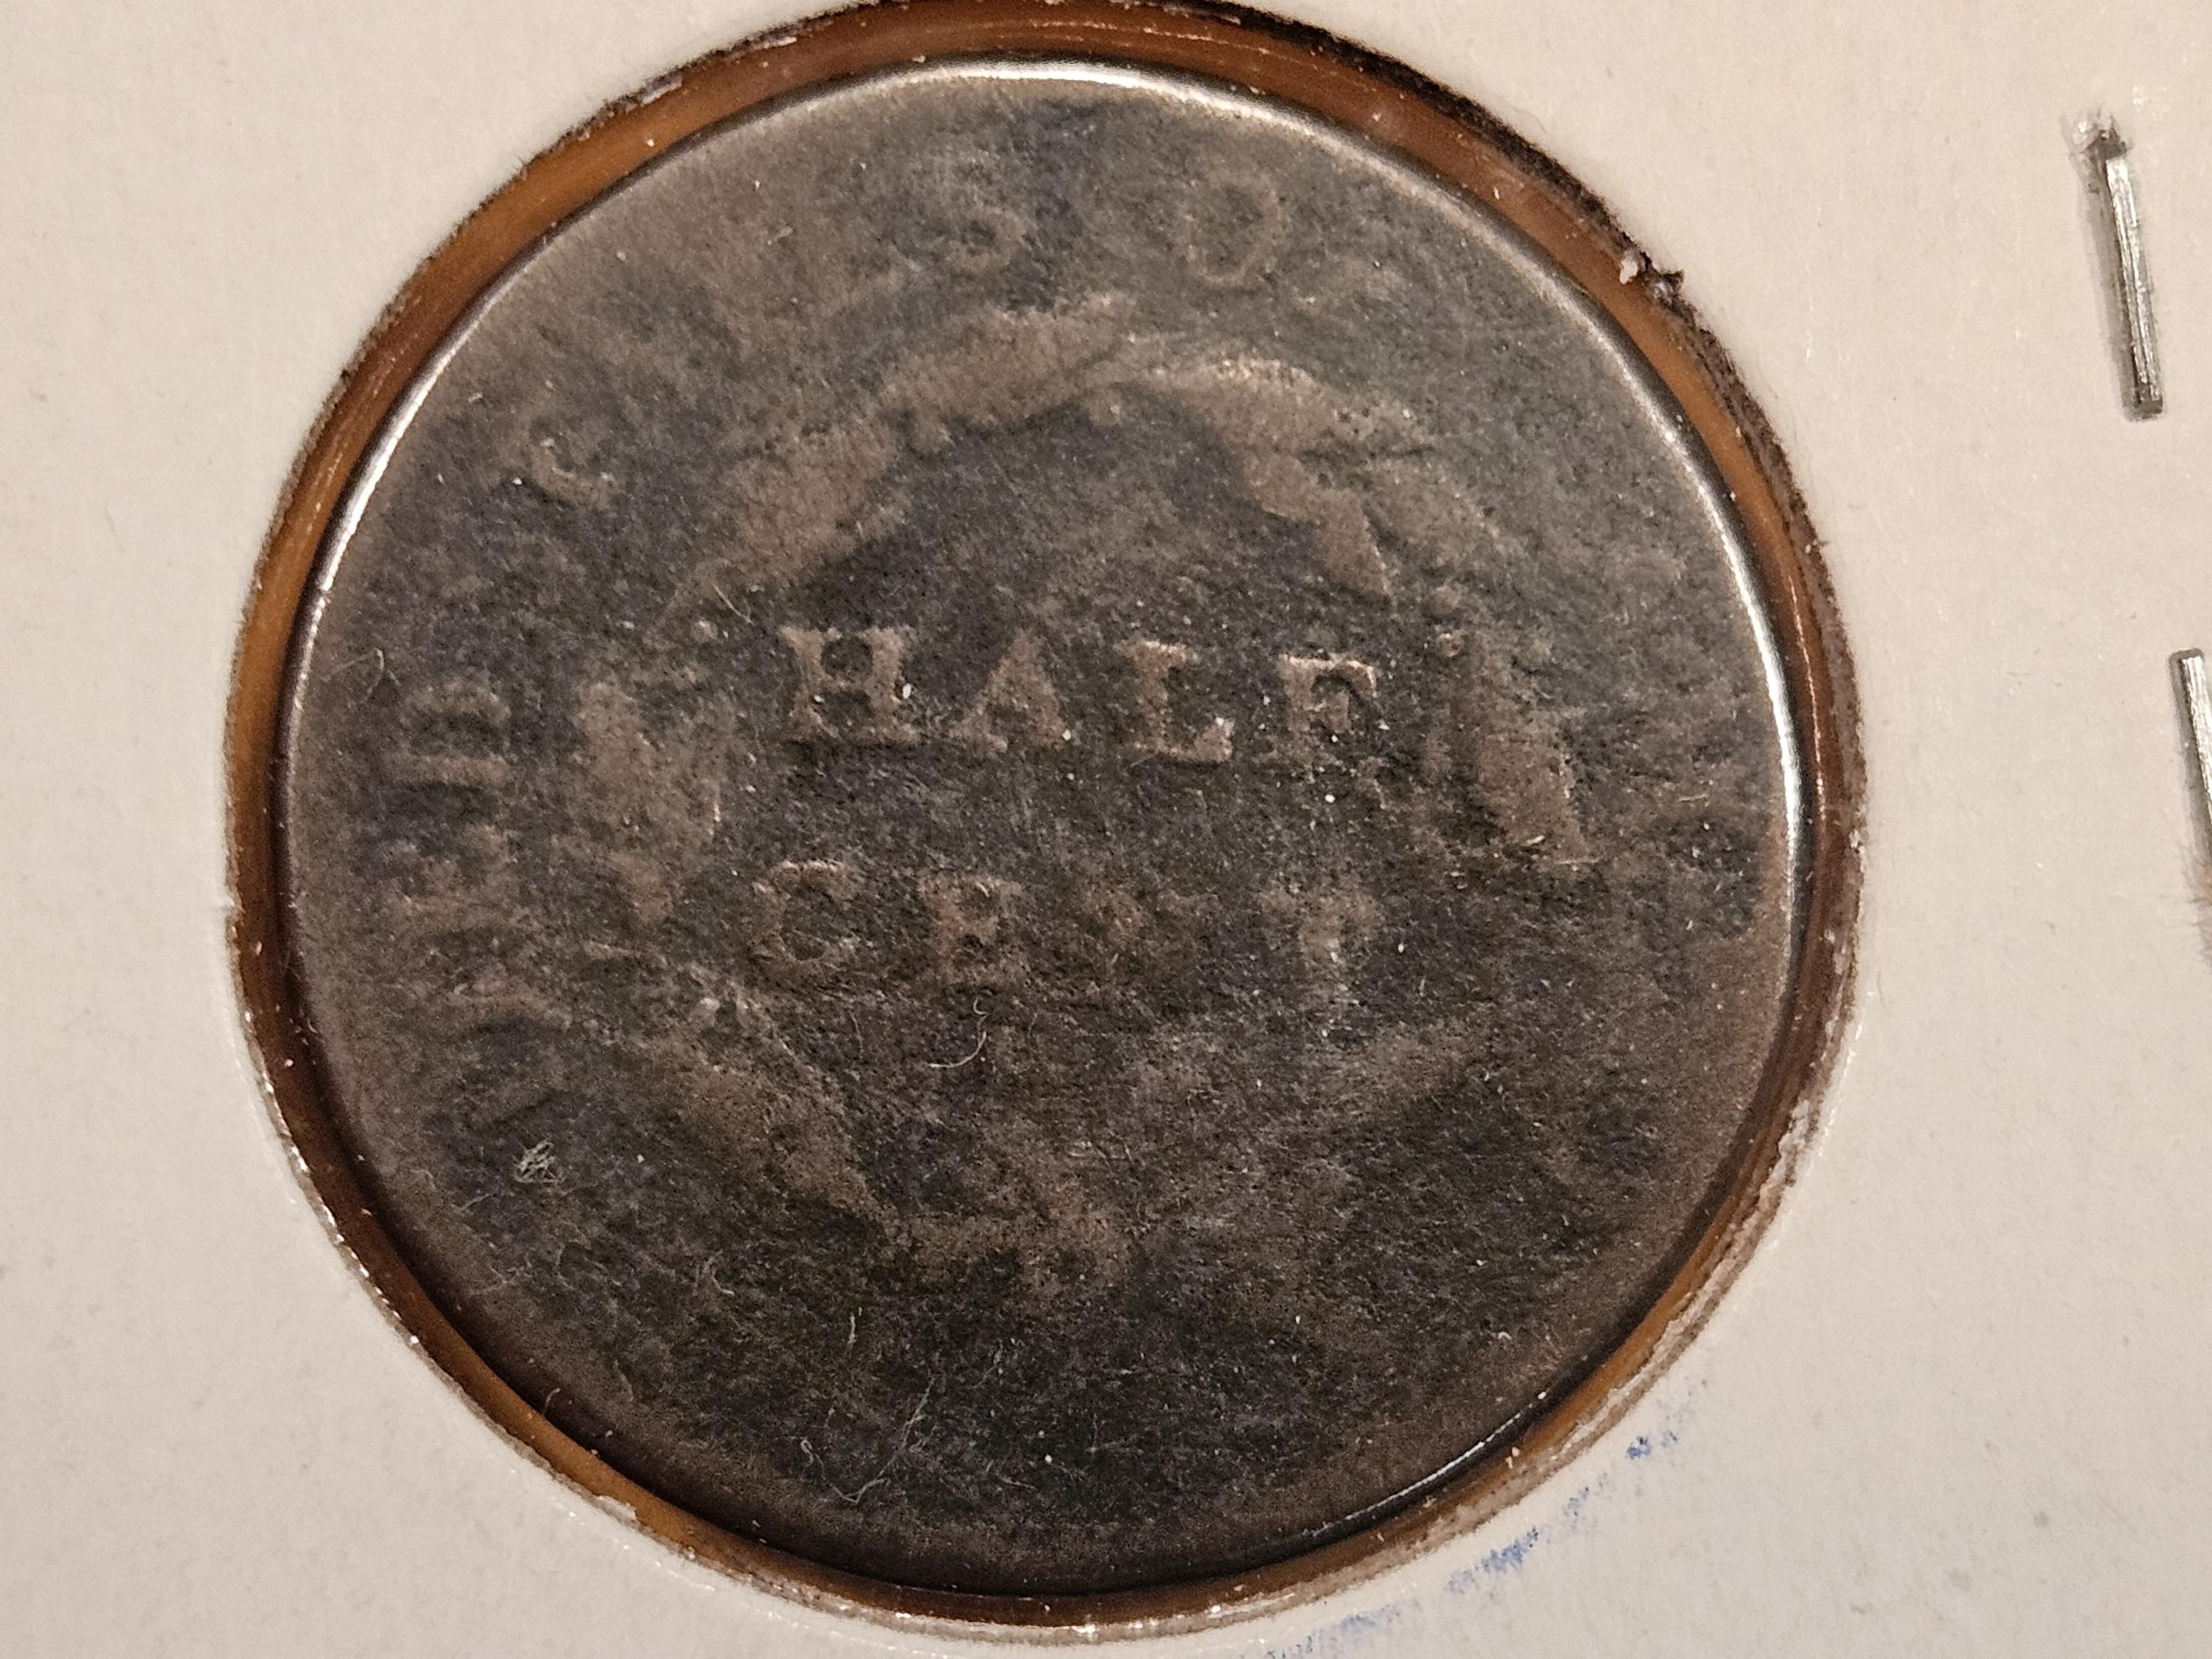 1809 Draped Bust Half Cent